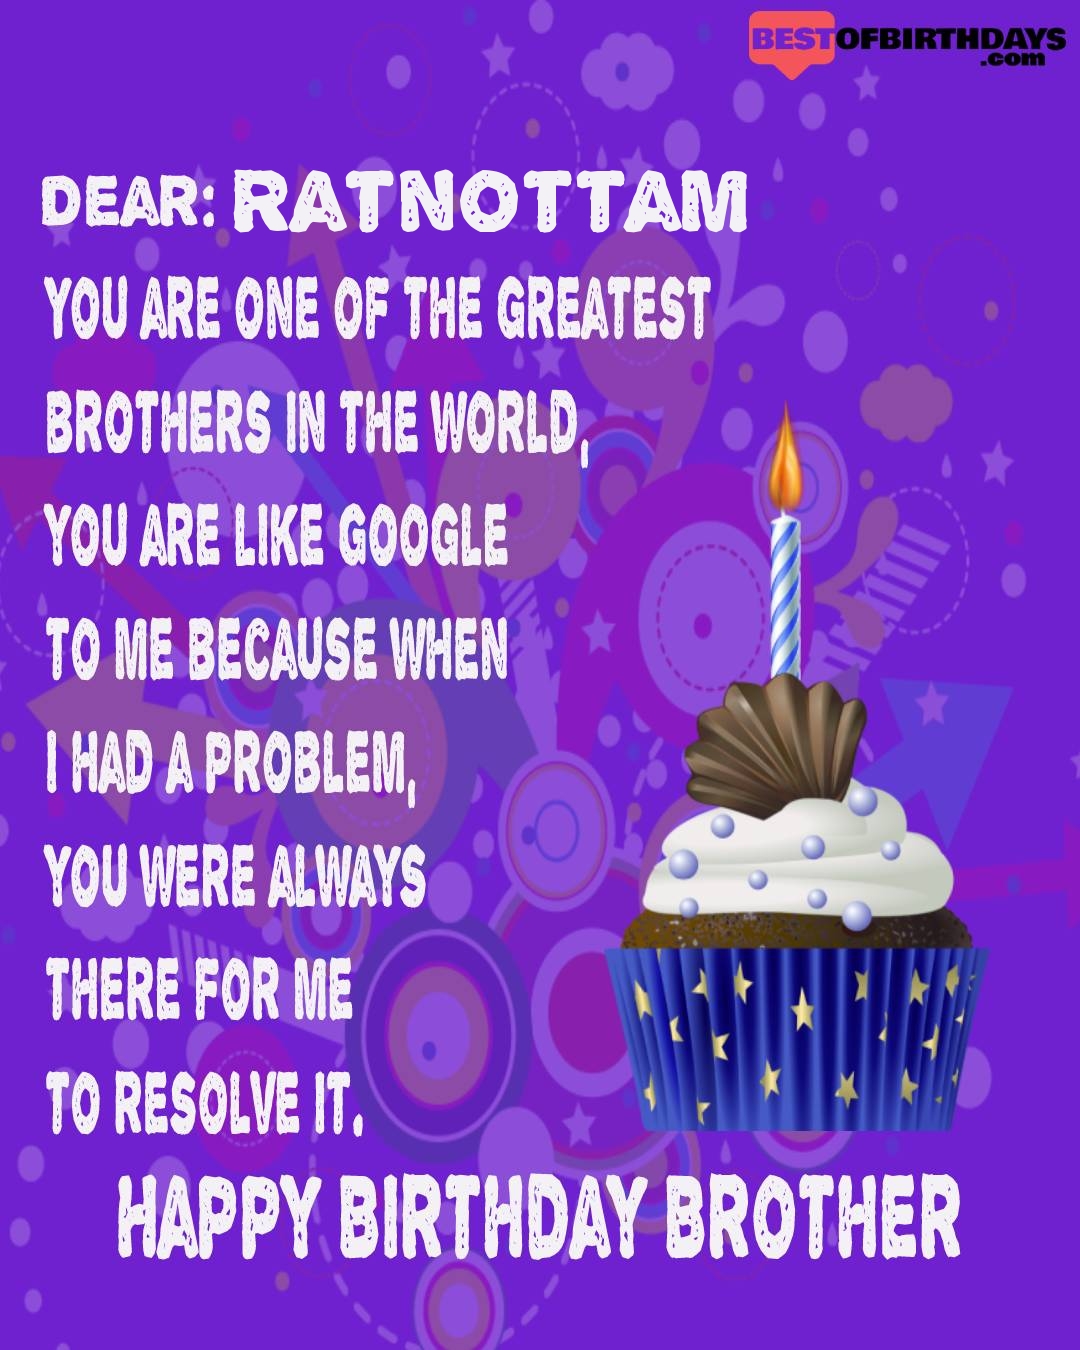 Happy birthday ratnottam bhai brother bro